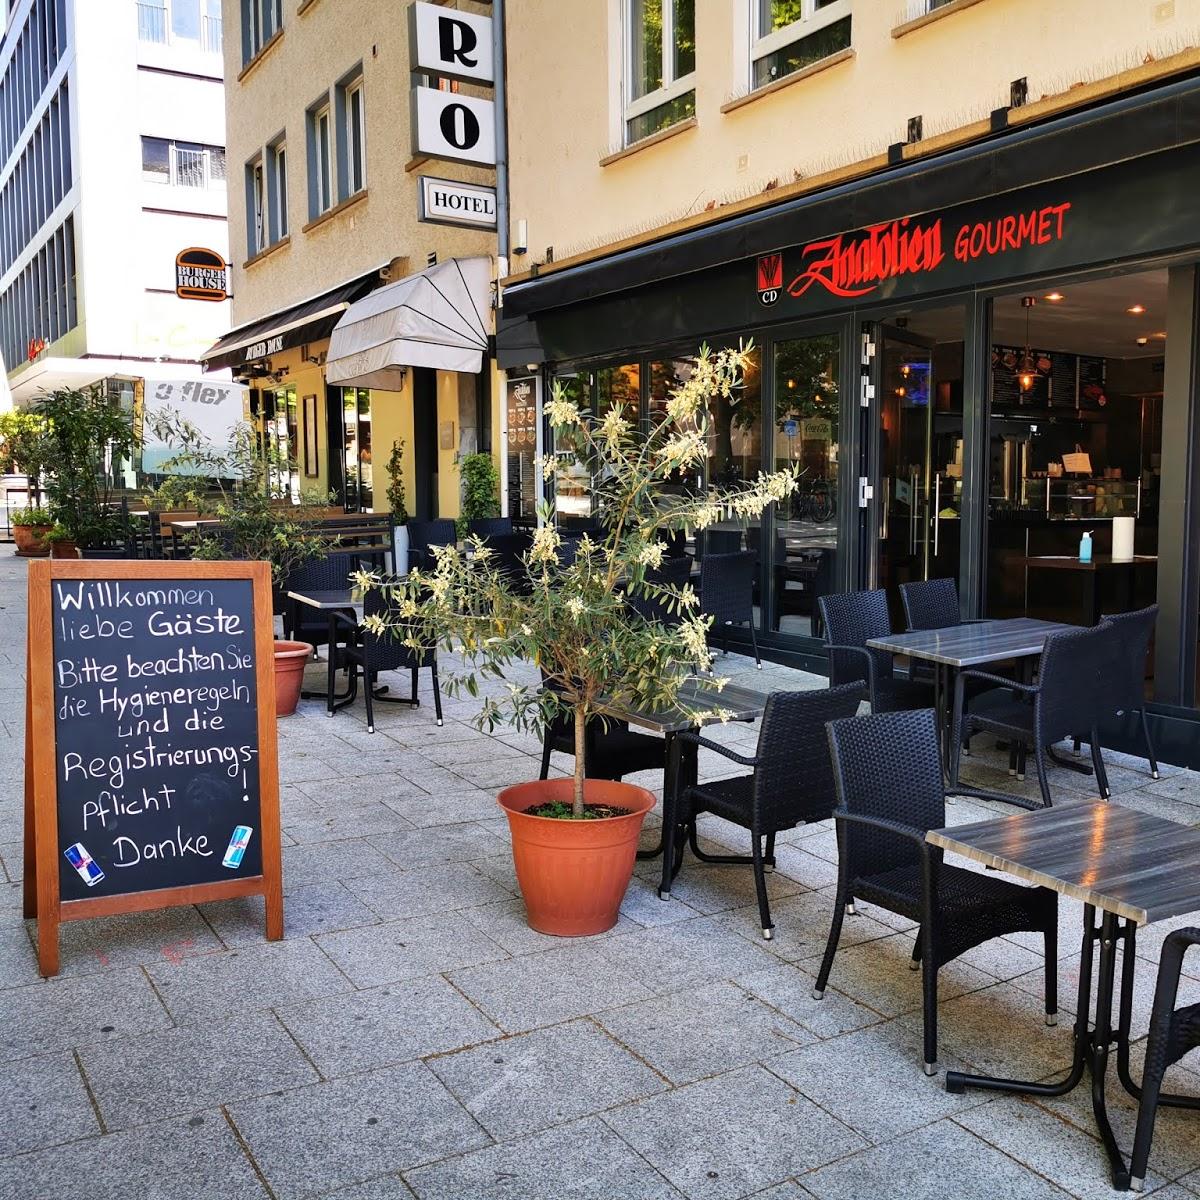 Restaurant "Anatolien Gourmet" in Stuttgart